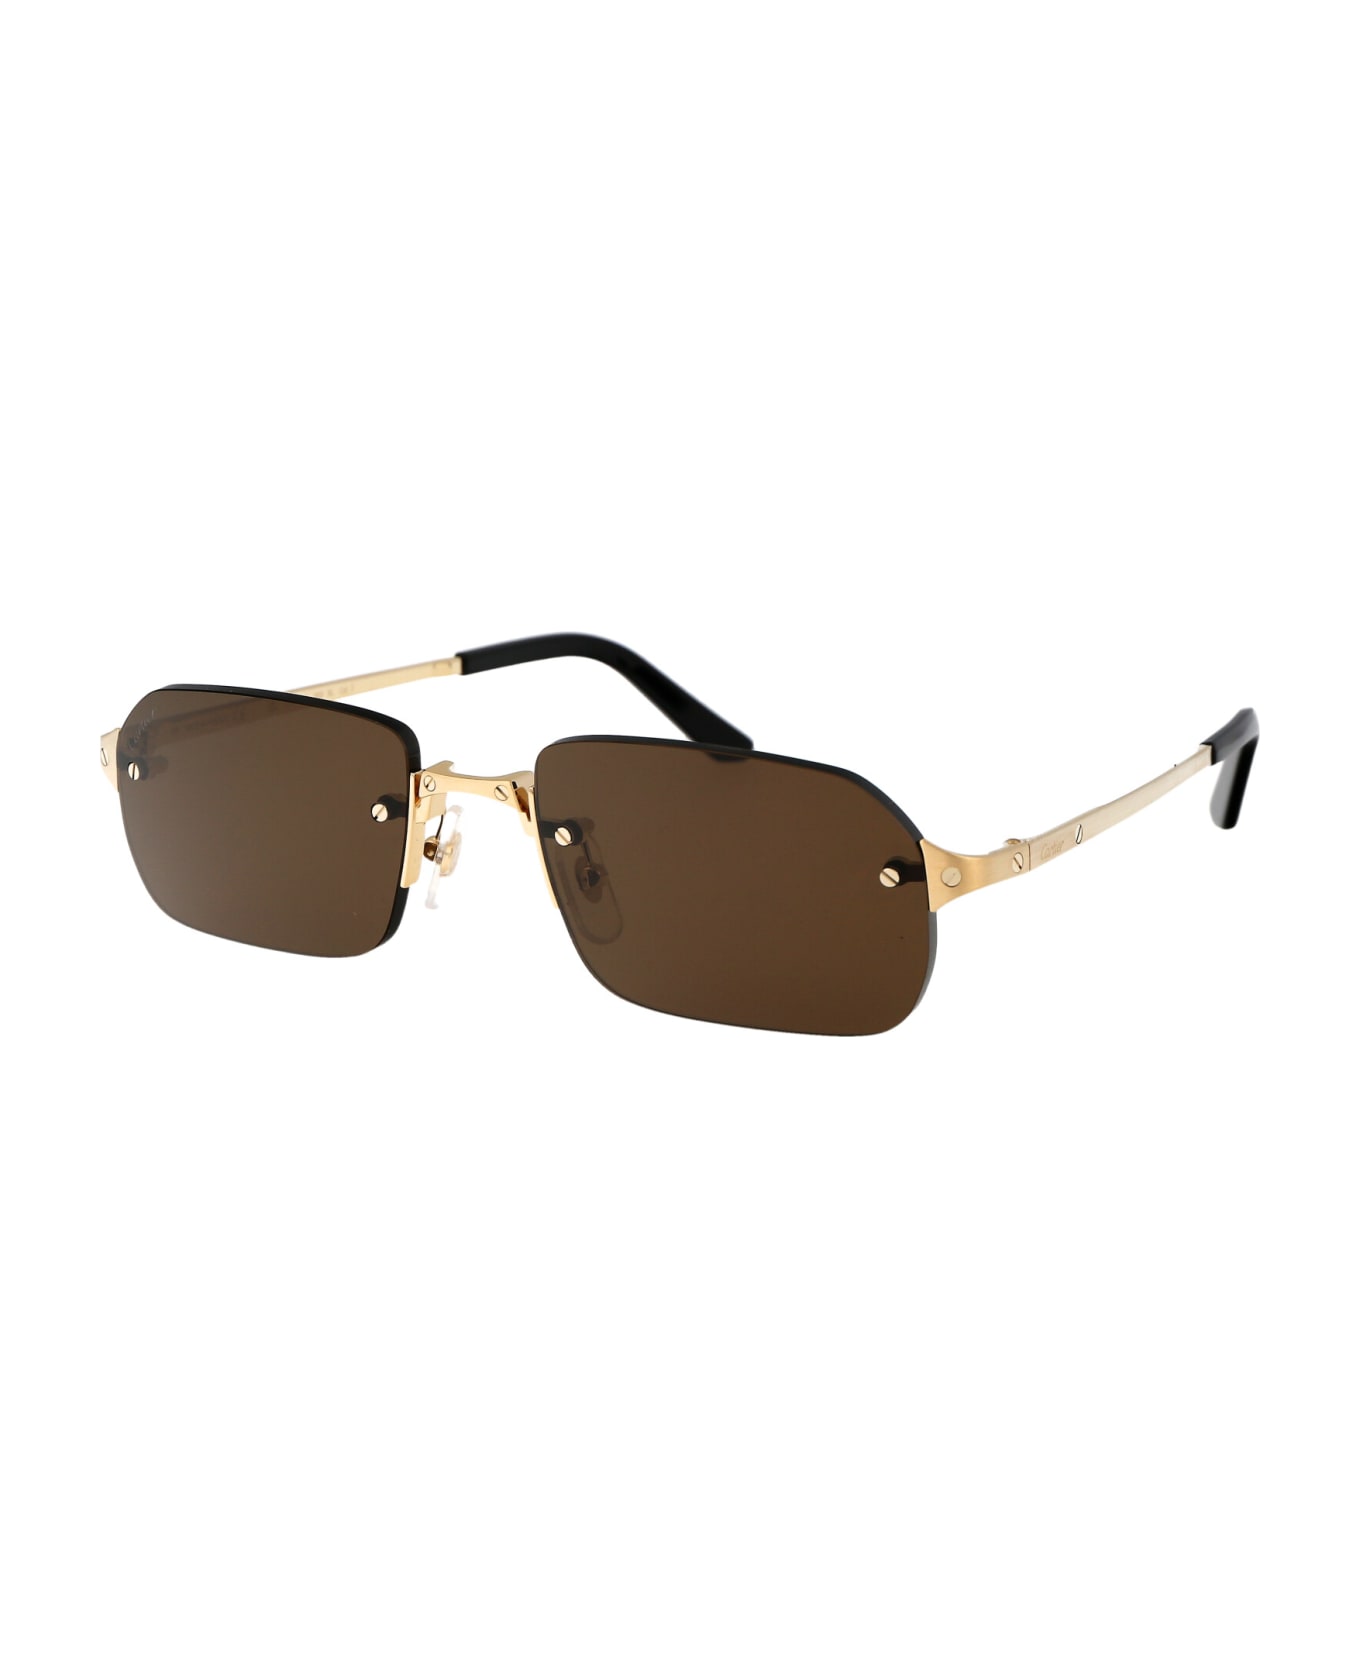 Cartier Eyewear Ct0460s Sunglasses - 002 GOLD GOLD BROWN